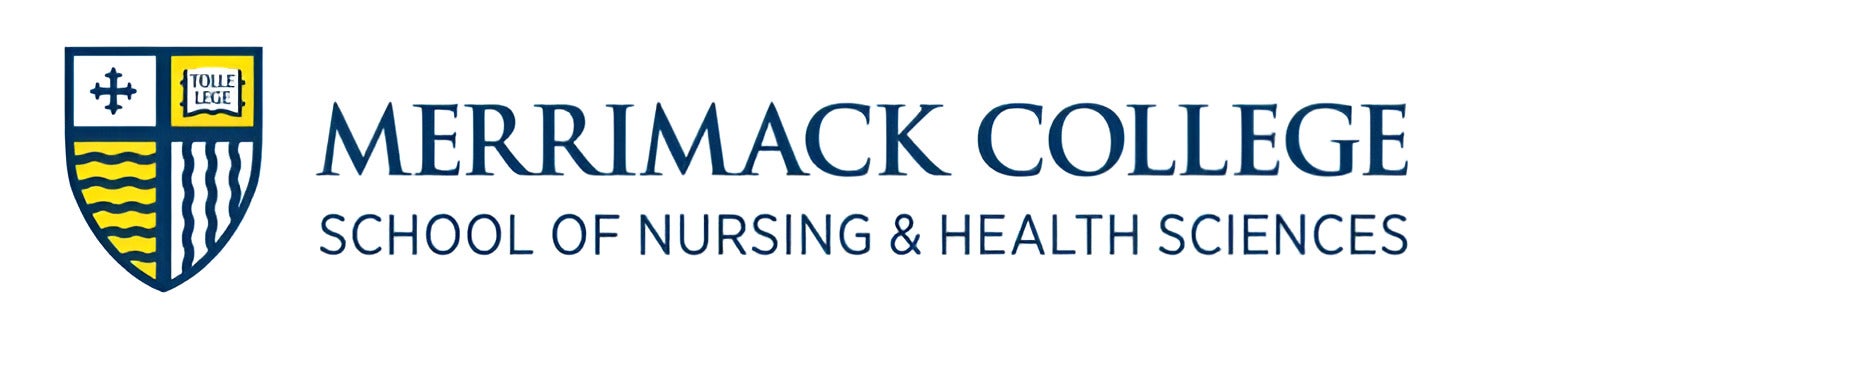 Merrimack College School of Nursing & Health Sciences logo